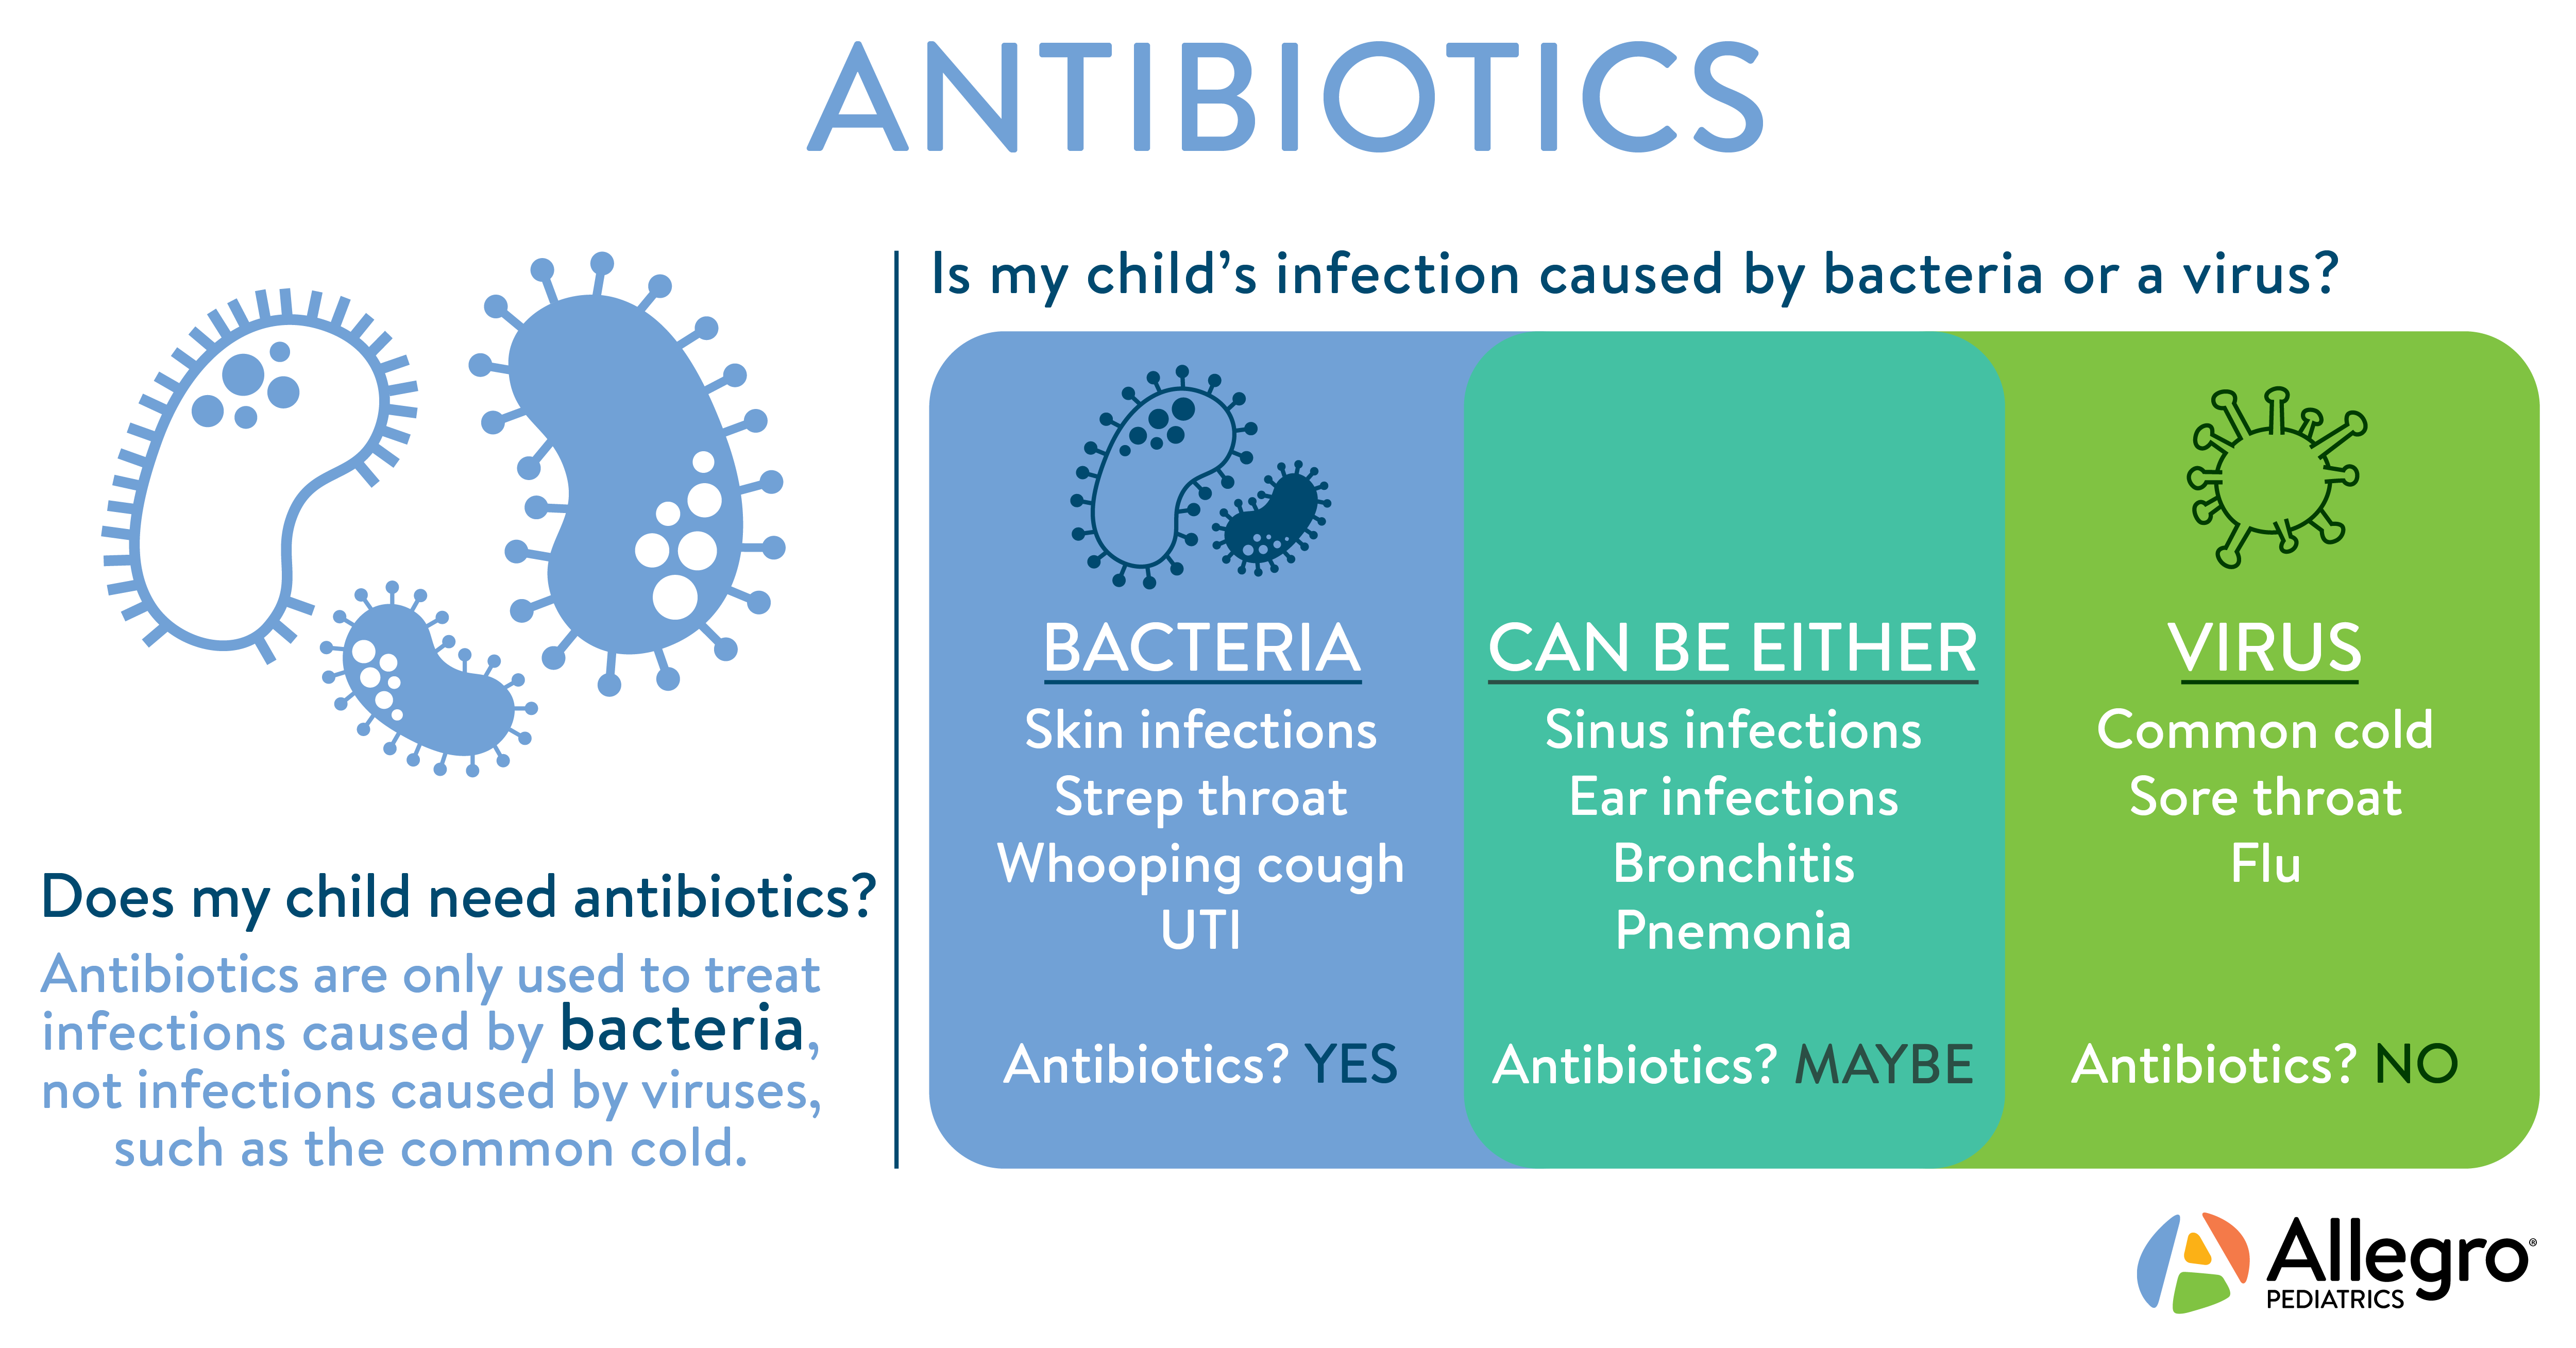 Does my child need antibiotics?